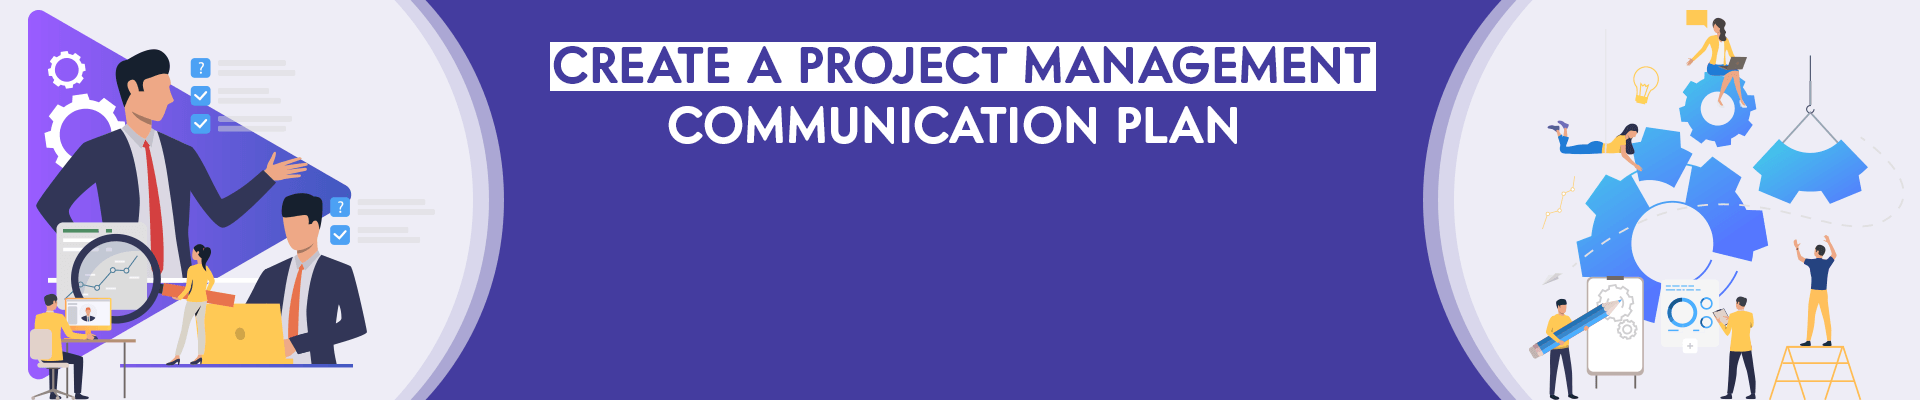 Create A Project Management Communication Plan